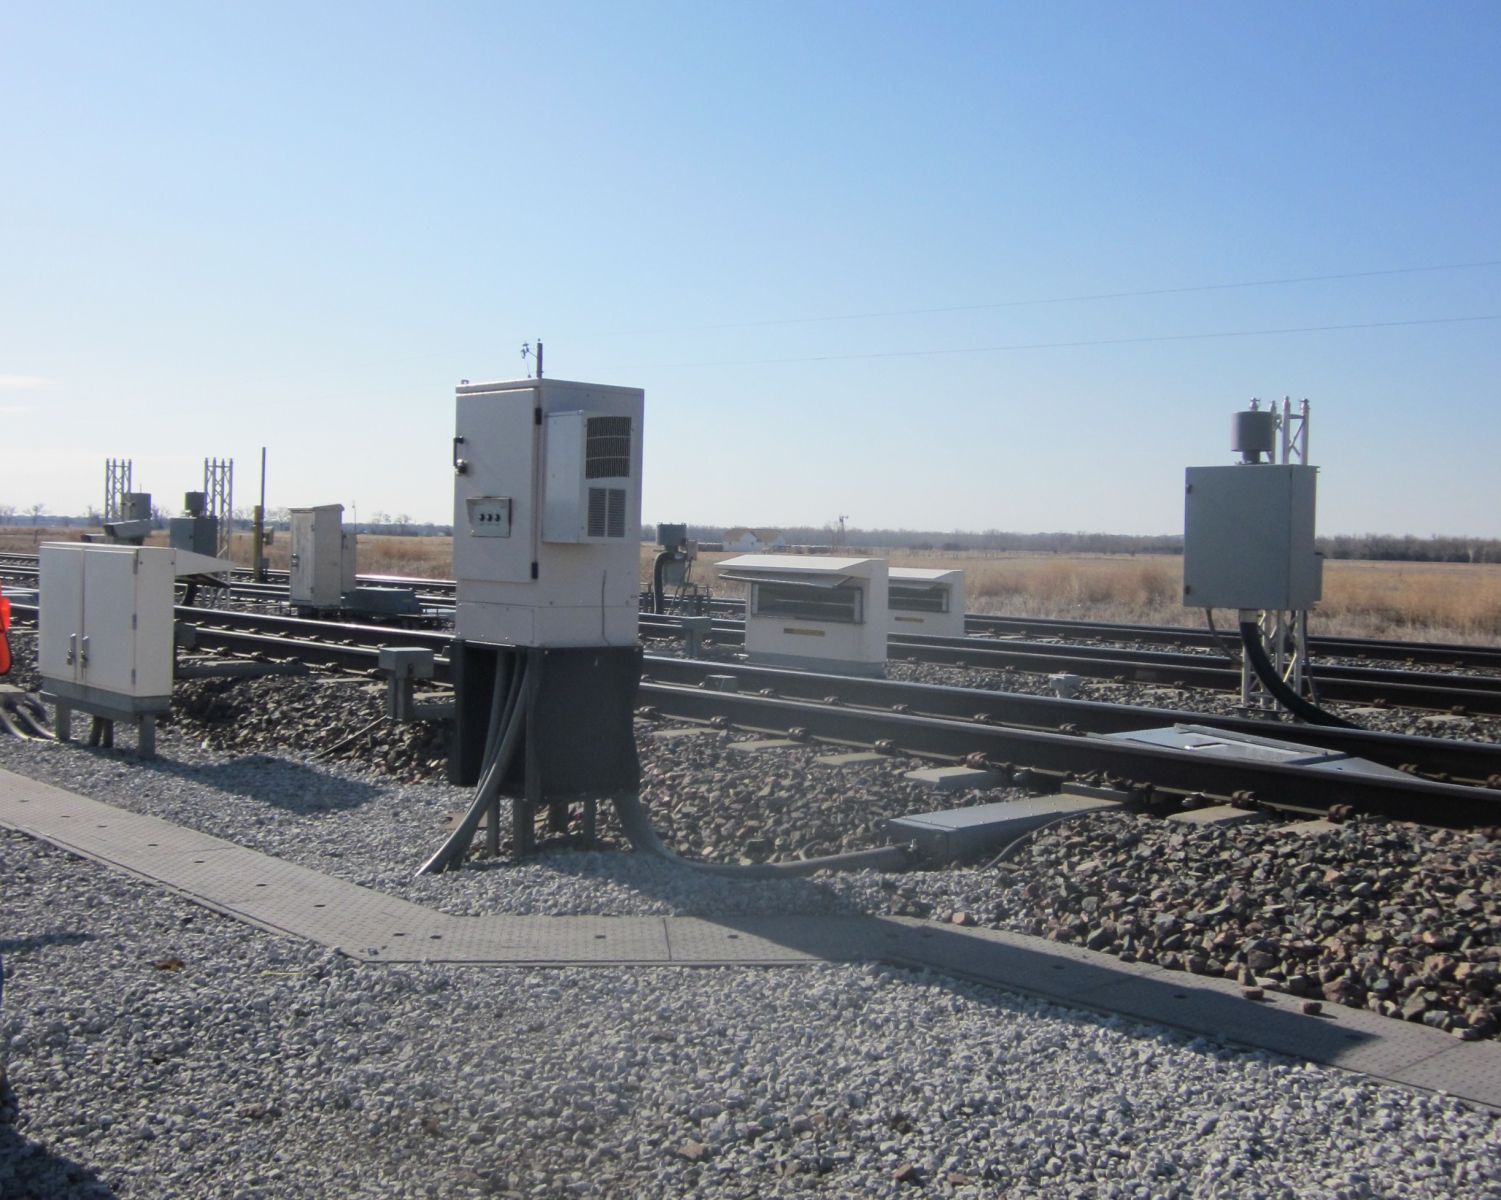 sfx17 outdoor enclosure trackside in positive train control application